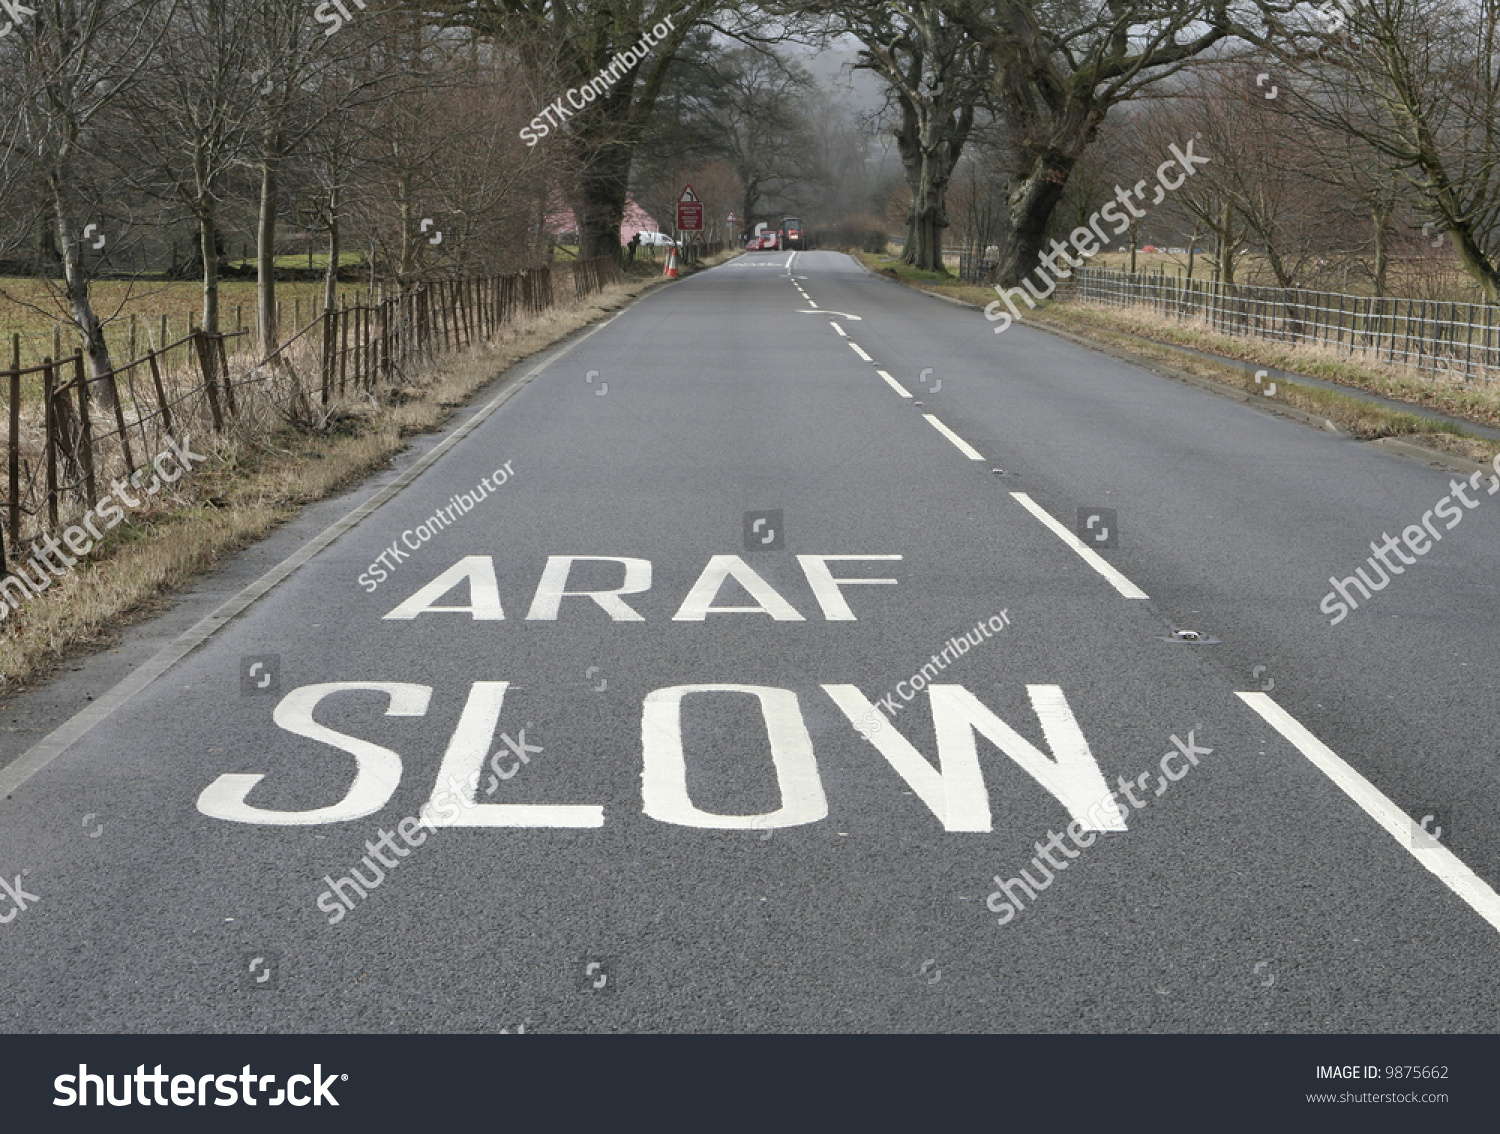 Bilingual road sign (Welsh & English) #9875662